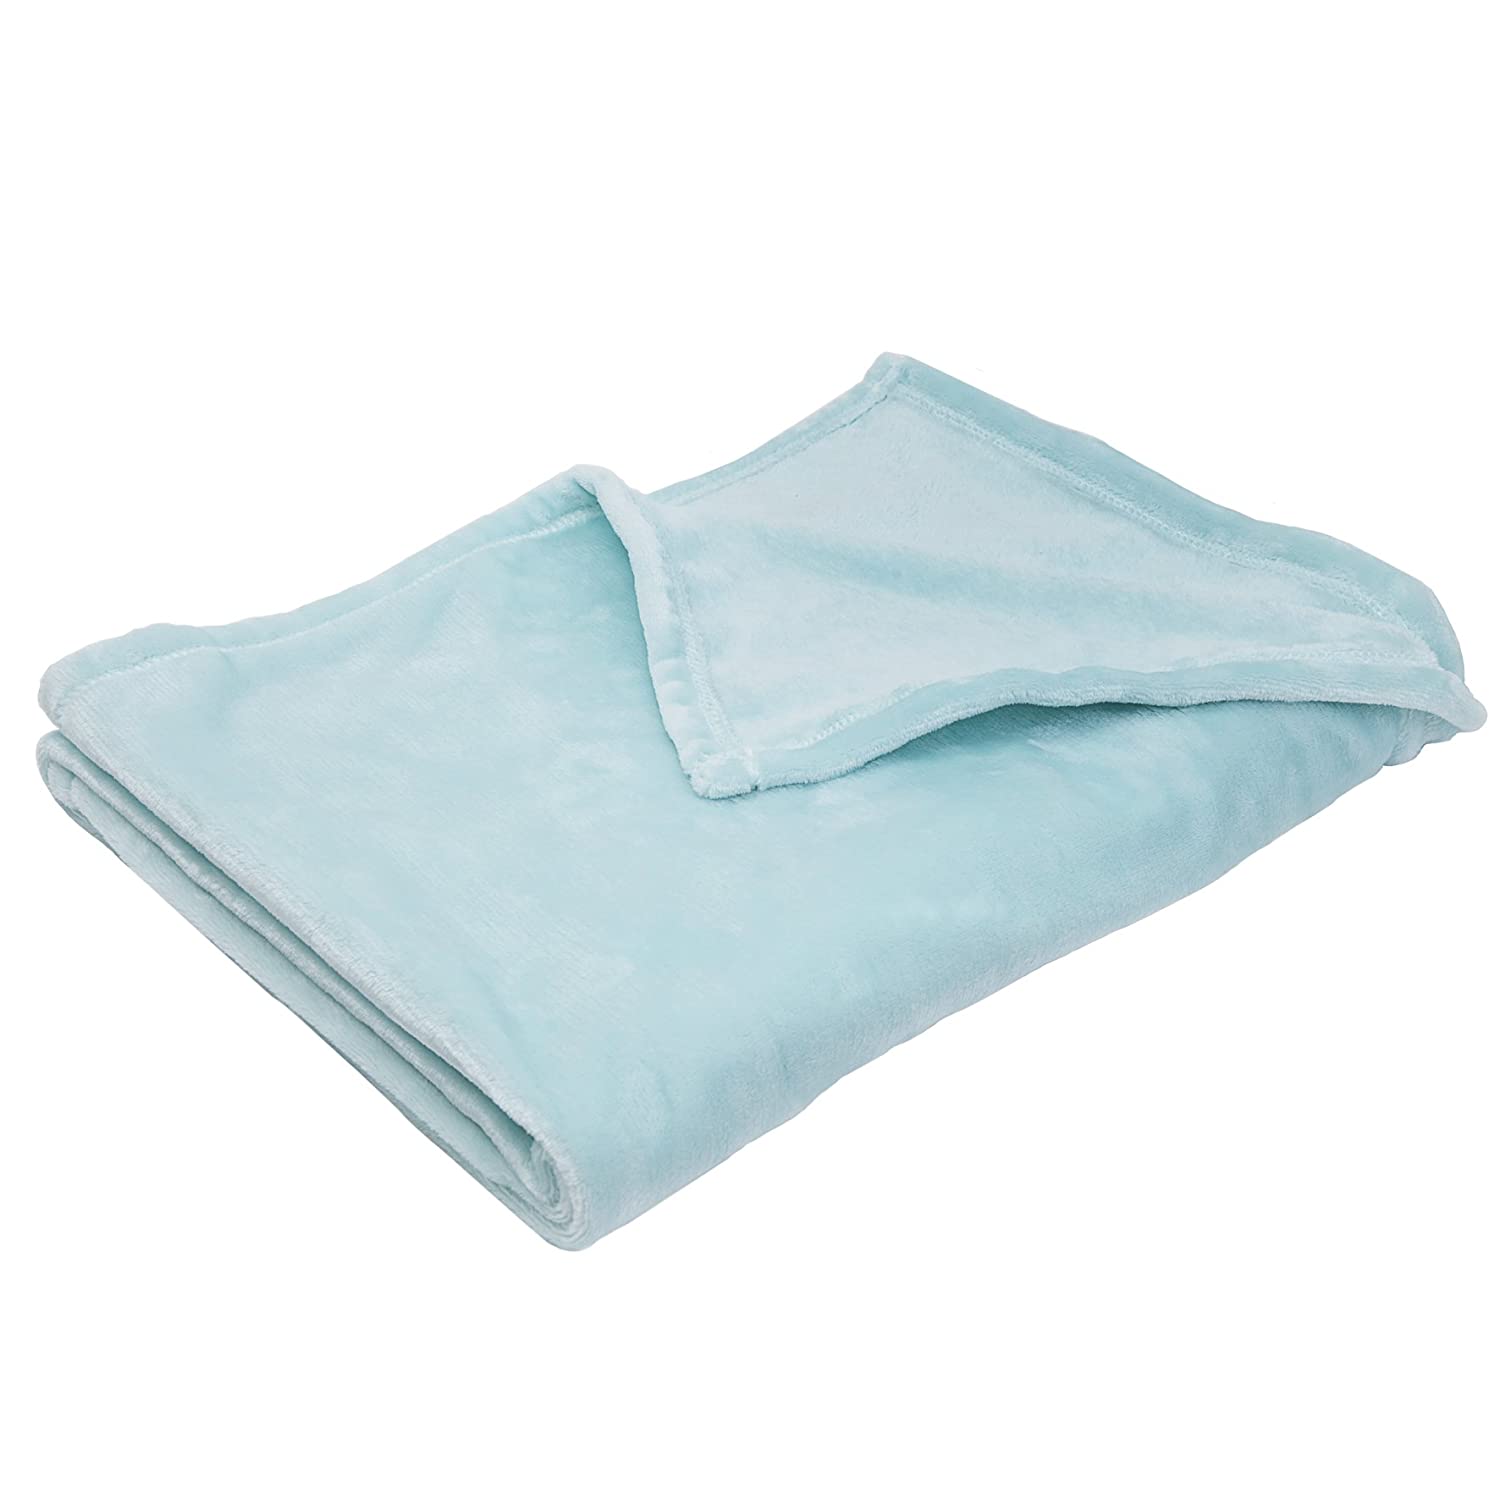 Babycalin Blanket 100 X 150 Cm  Aqua